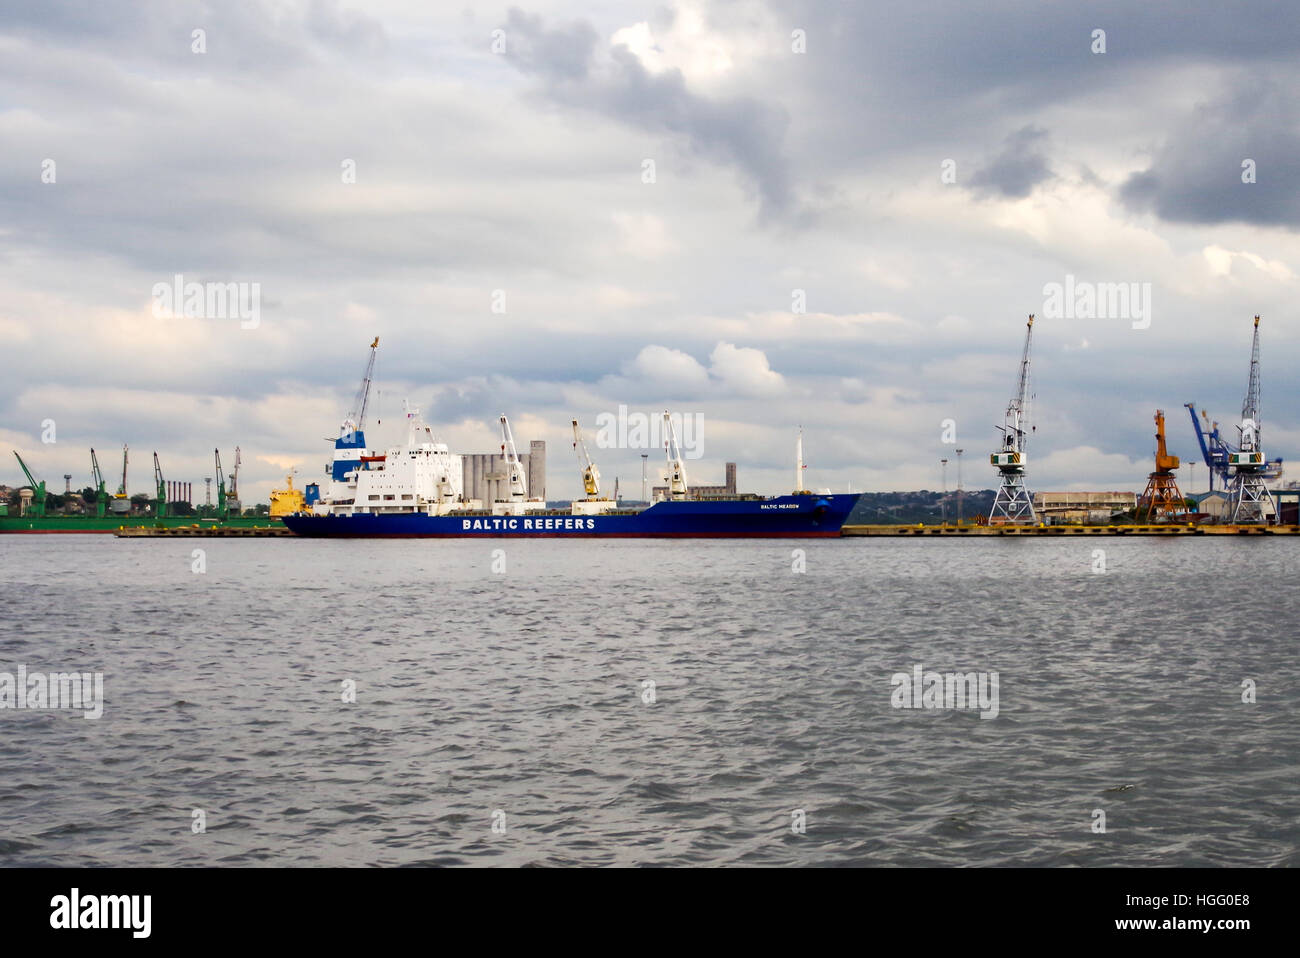 Baltic Reefers cargo vessel in the port of Havana, Cuba Stock Photo